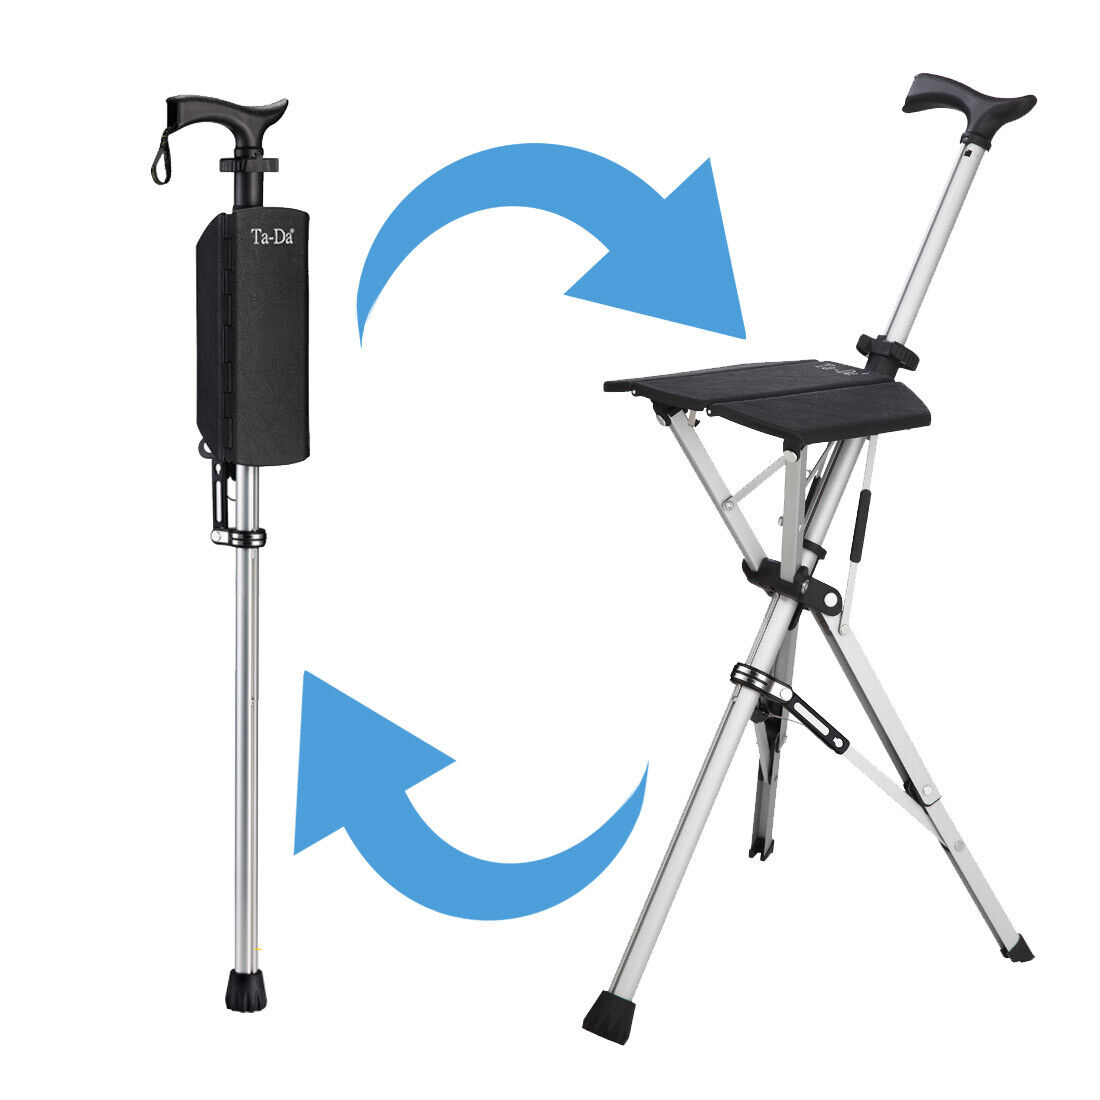 build kerne tredobbelt Ta-Da® Seat Stick / Chair - the walking cane that converts to a tripod chair  | eBay